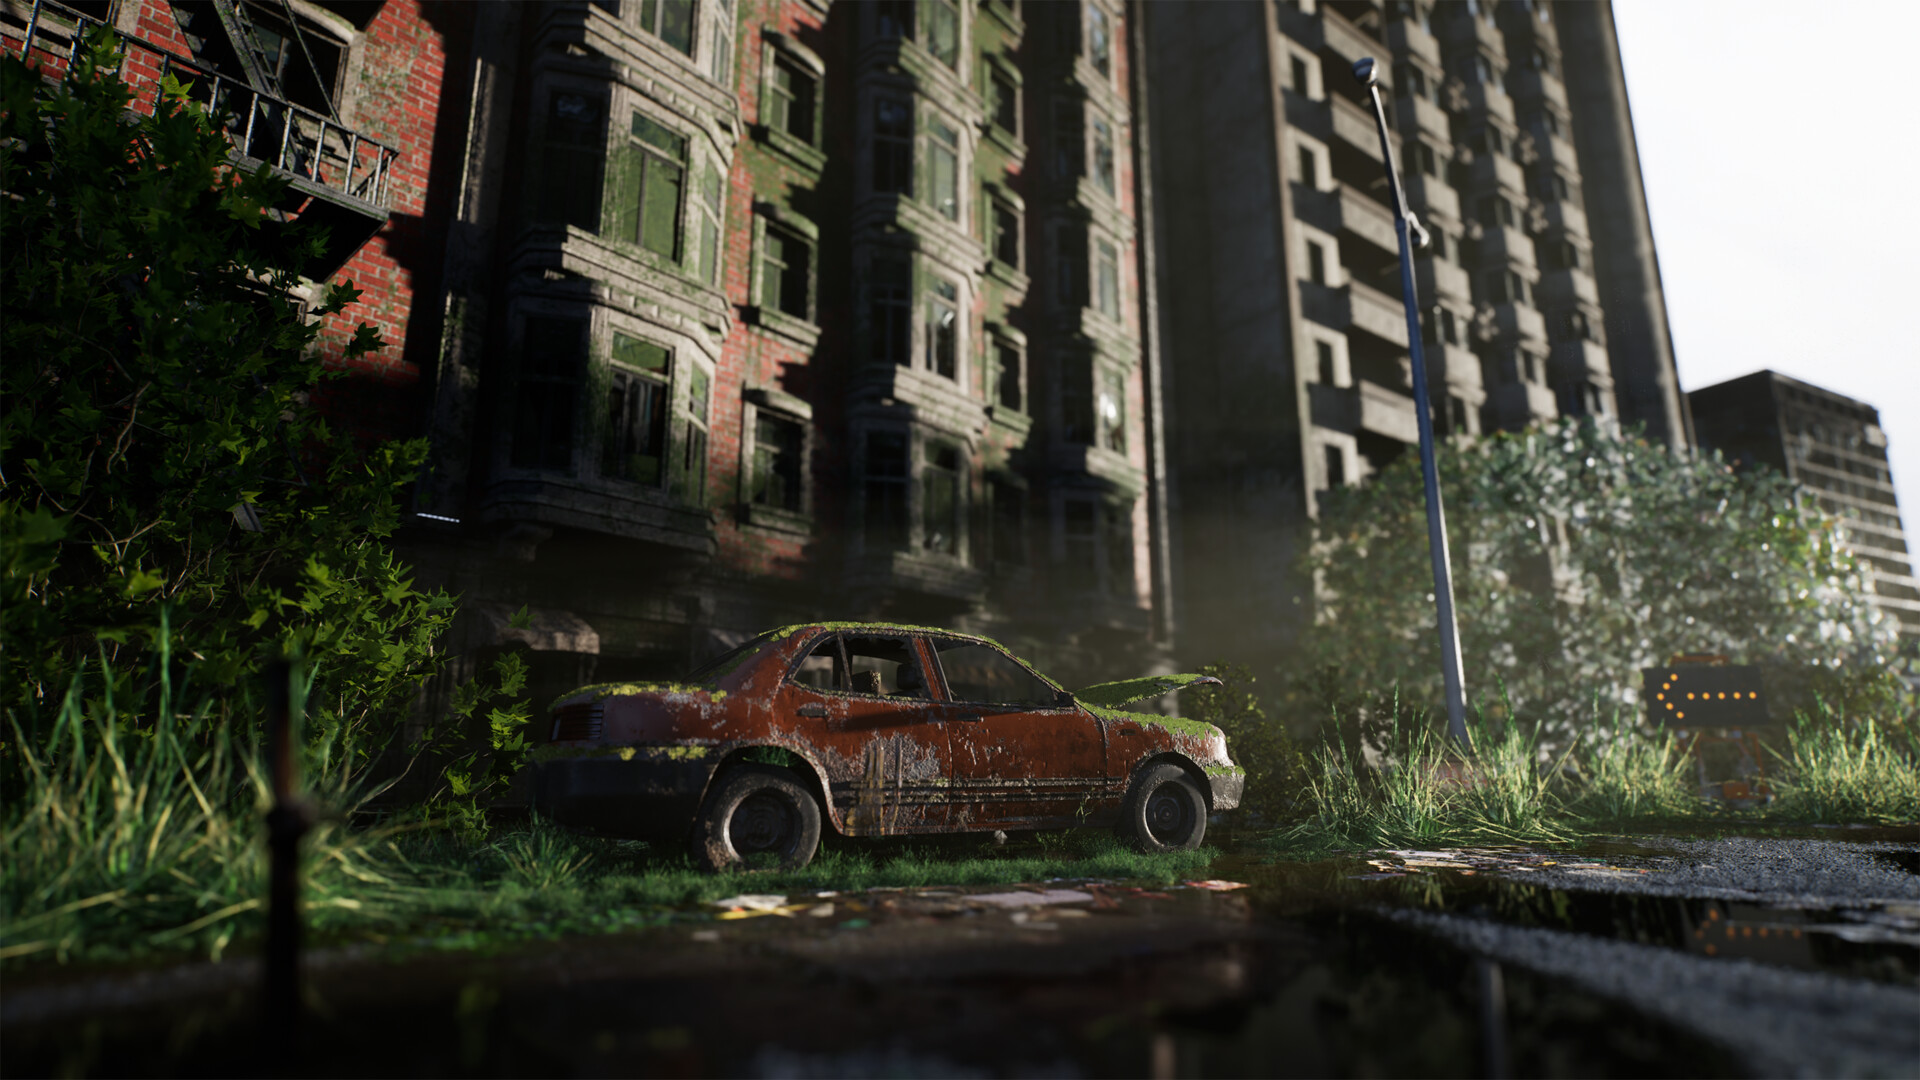 General 1920x1080 artwork digital art video games The Last of Us fan art car car wreck ruins abandoned apocalyptic video game art